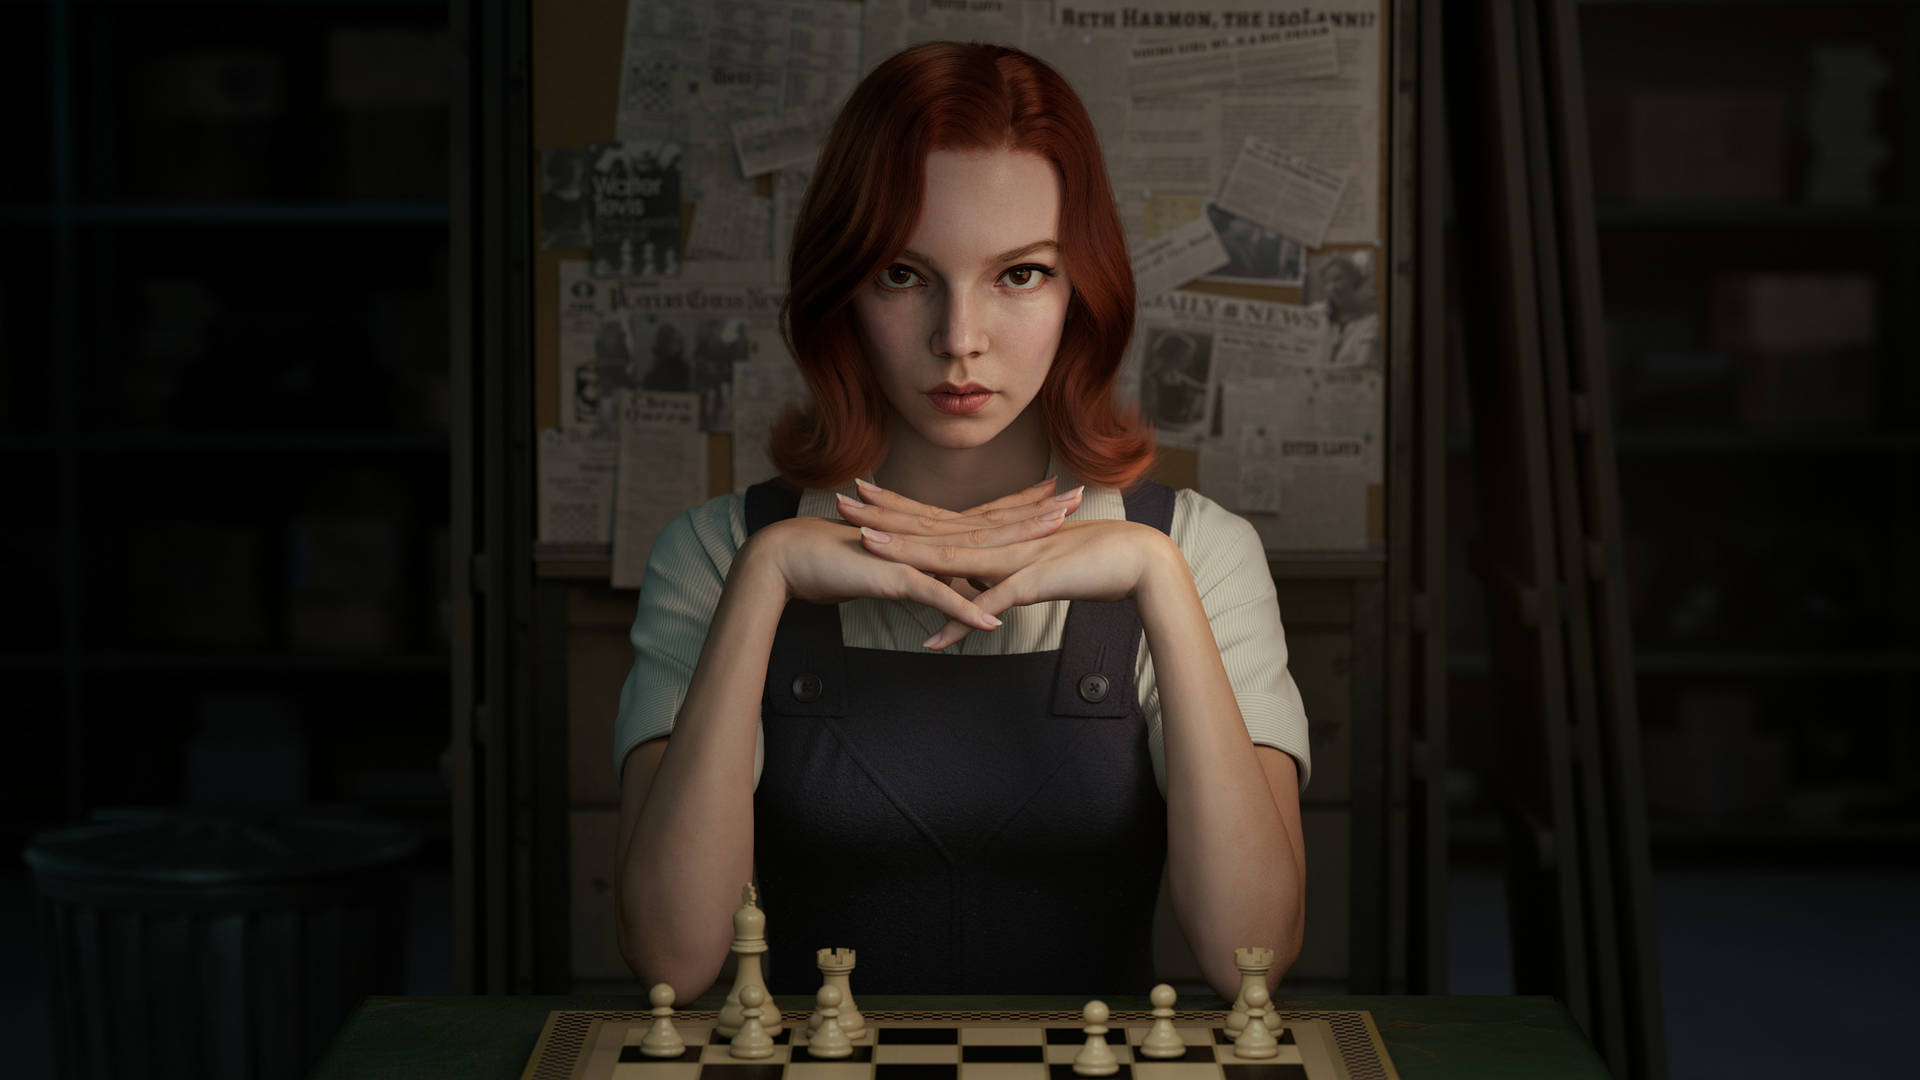 Chess prodigy Beth Harmon battling her opponents in The Queen's Gambit. Wallpaper